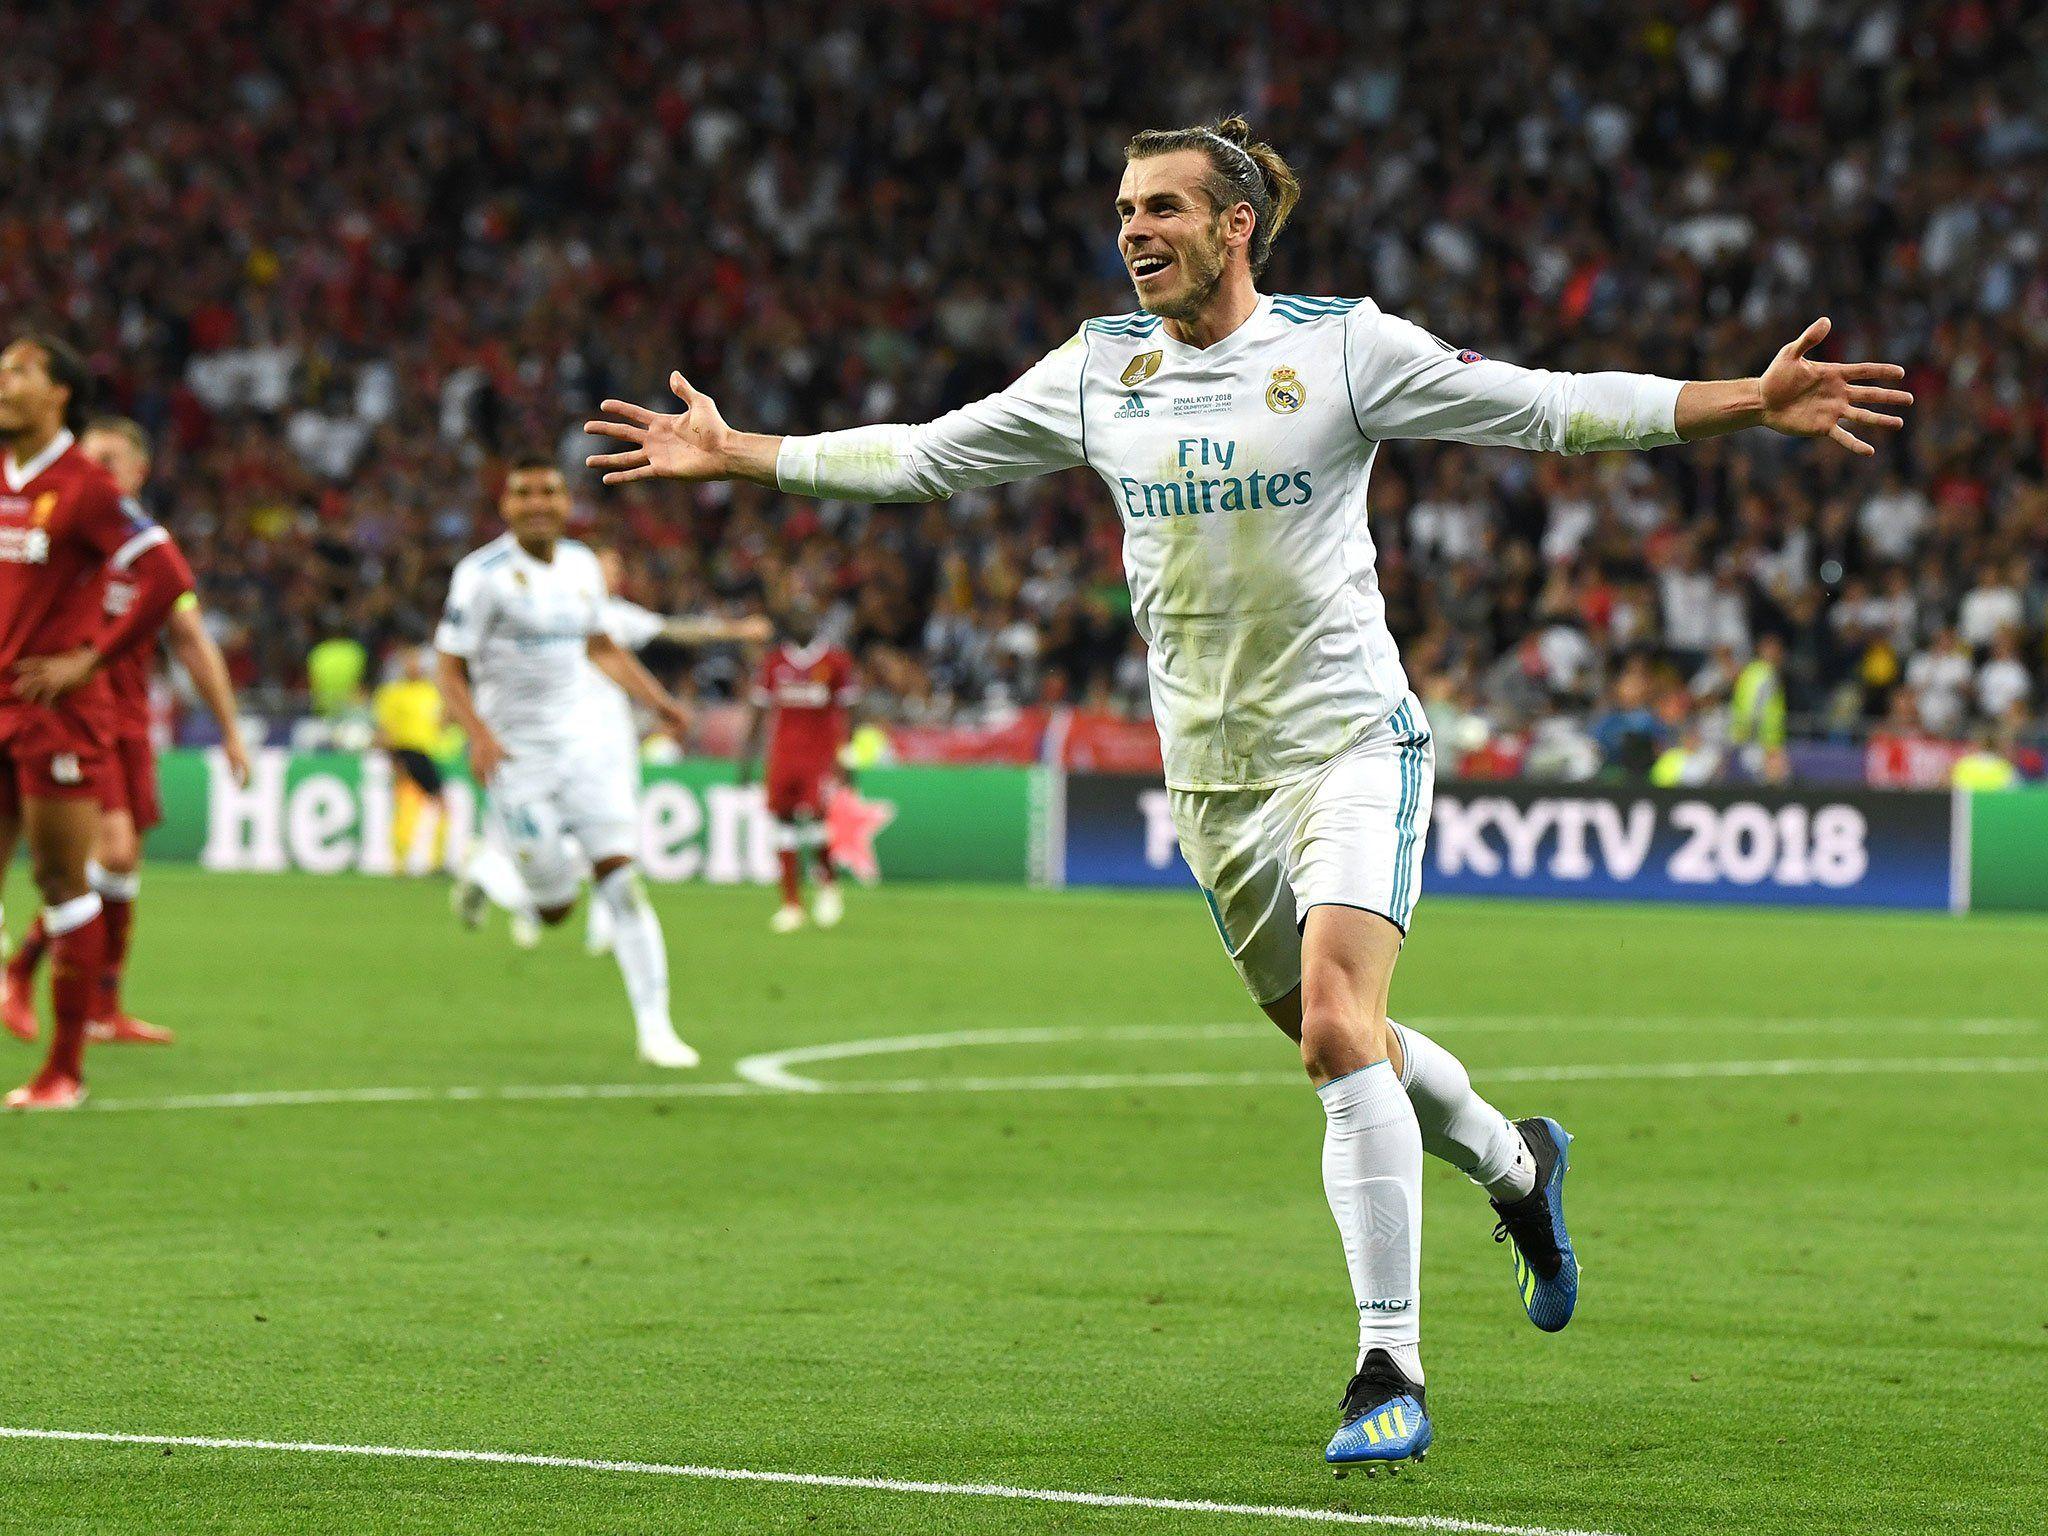 Liverpool vs Real Madrid: Gareth Bale's goal, Mohamed Salah's injury